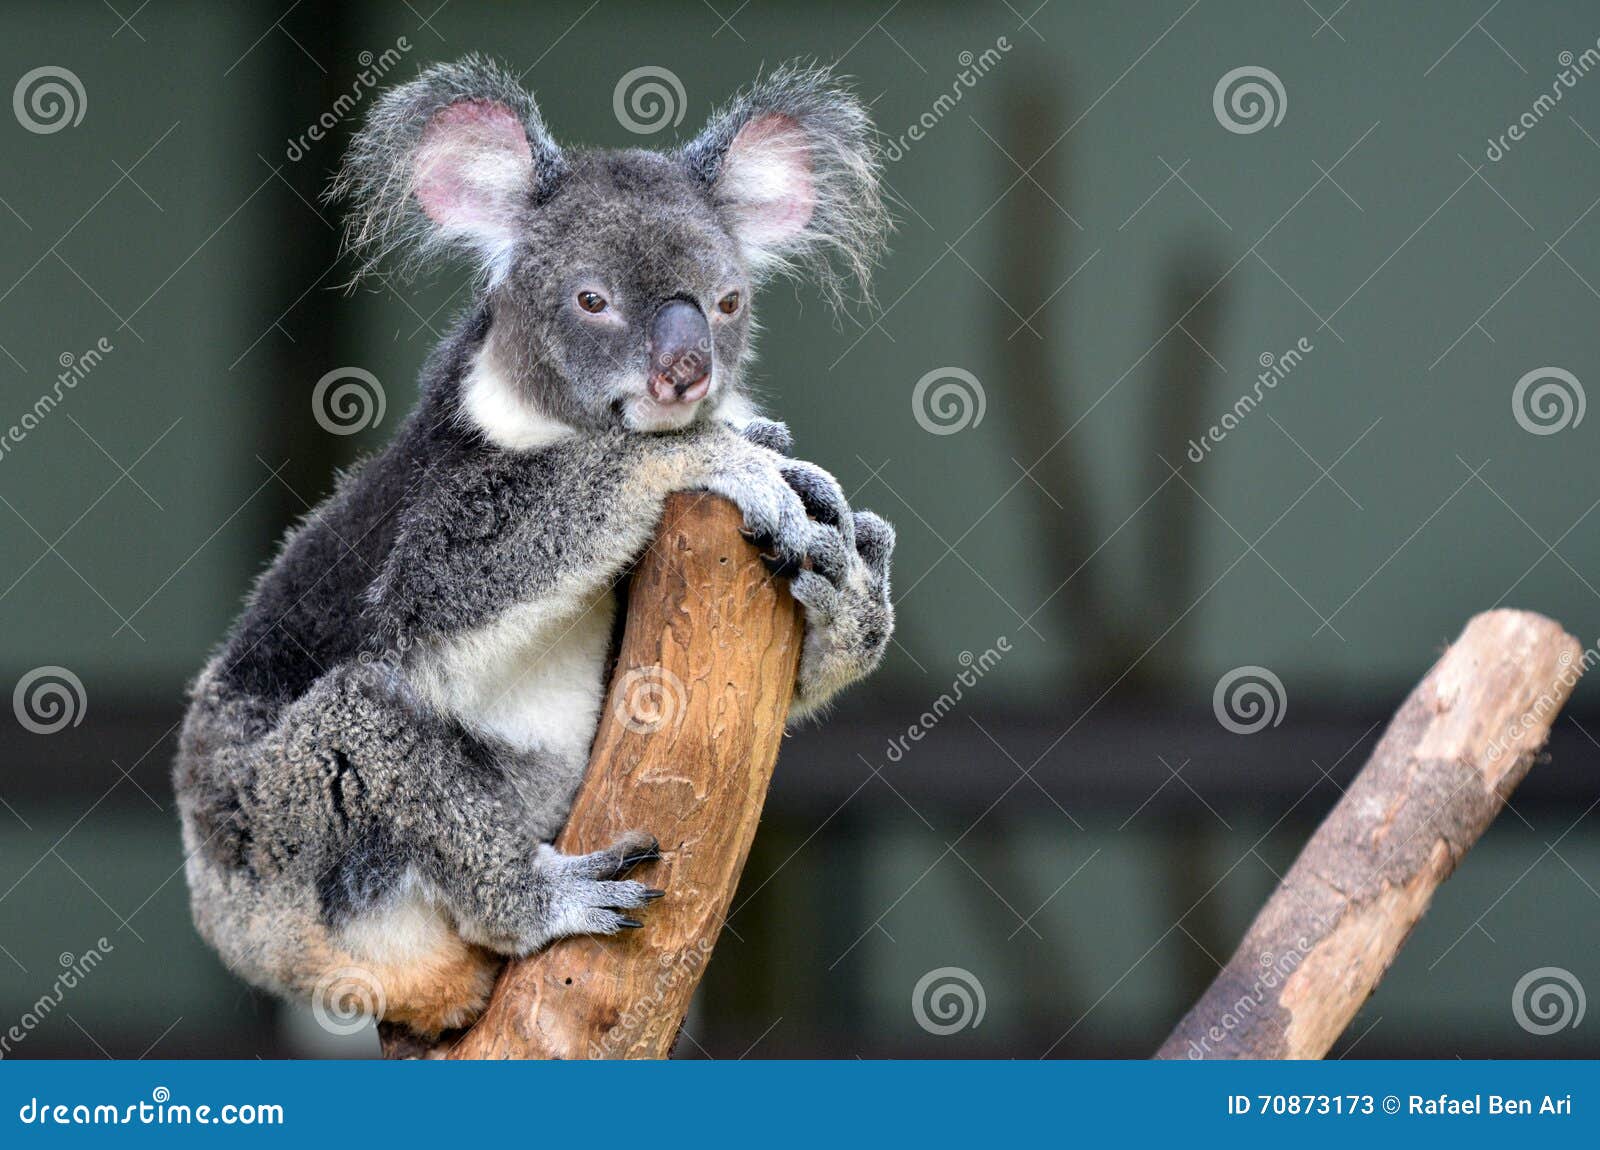 koala sit on a tree looks at the camera